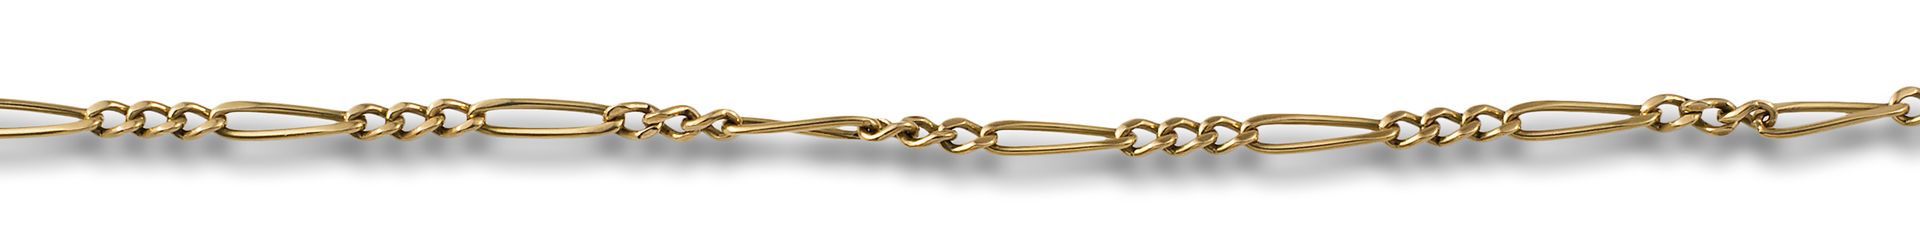 YELLOW GOLD BRACELET 18kt yellow gold openwork link bracelet. Weight: 7.65 gr. .